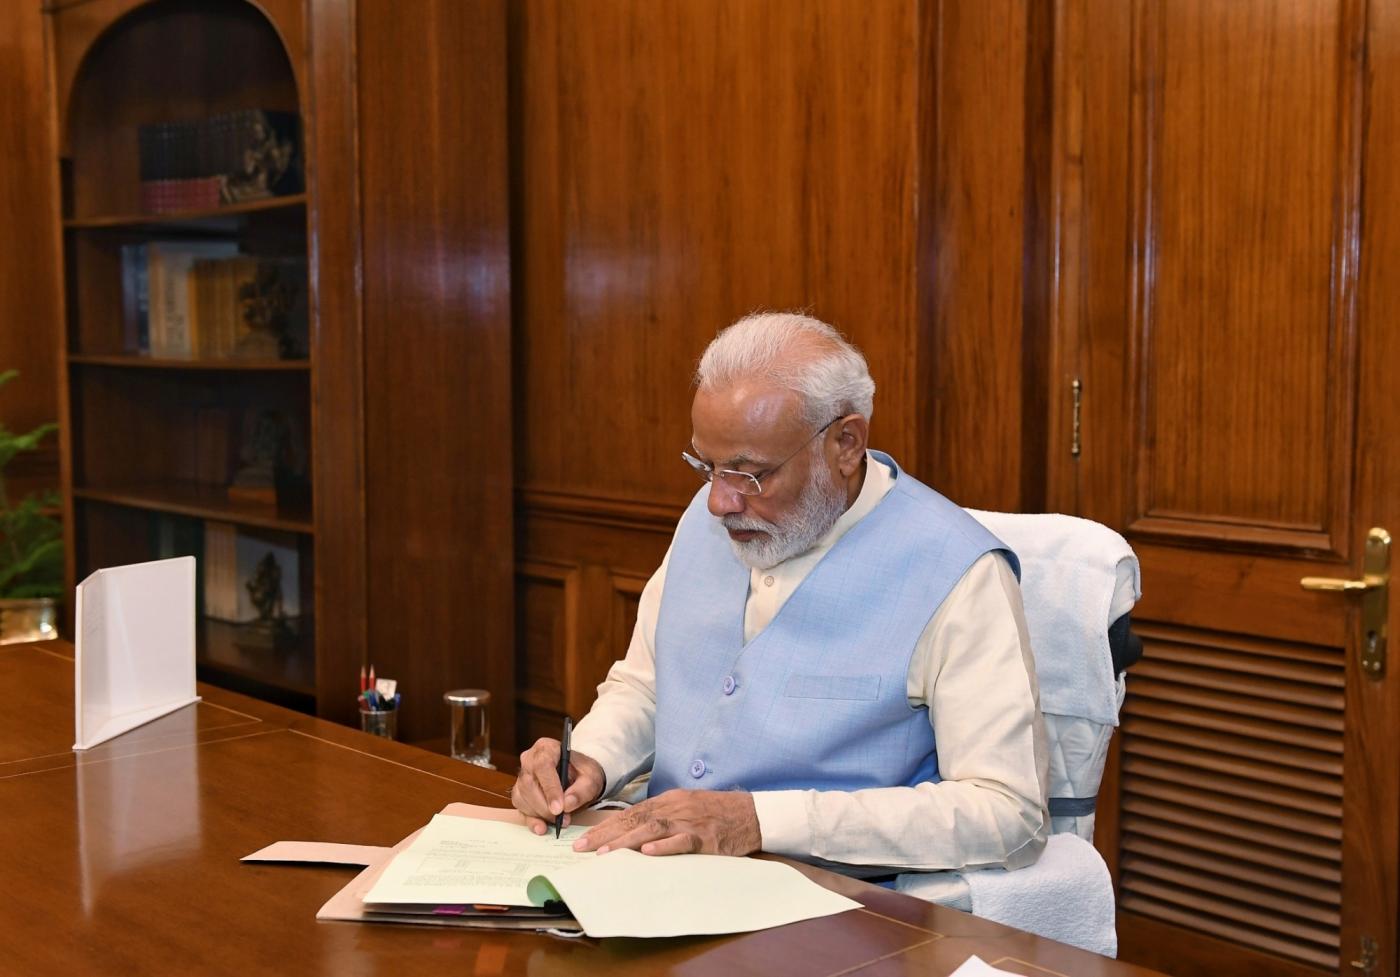 New Delhi: Prime Minister Narendra Modi takes charge of the office of the Prime Minister of India at South Block, in New Delhi on May 31, 2019. (Photo: IANS/PIB) by .